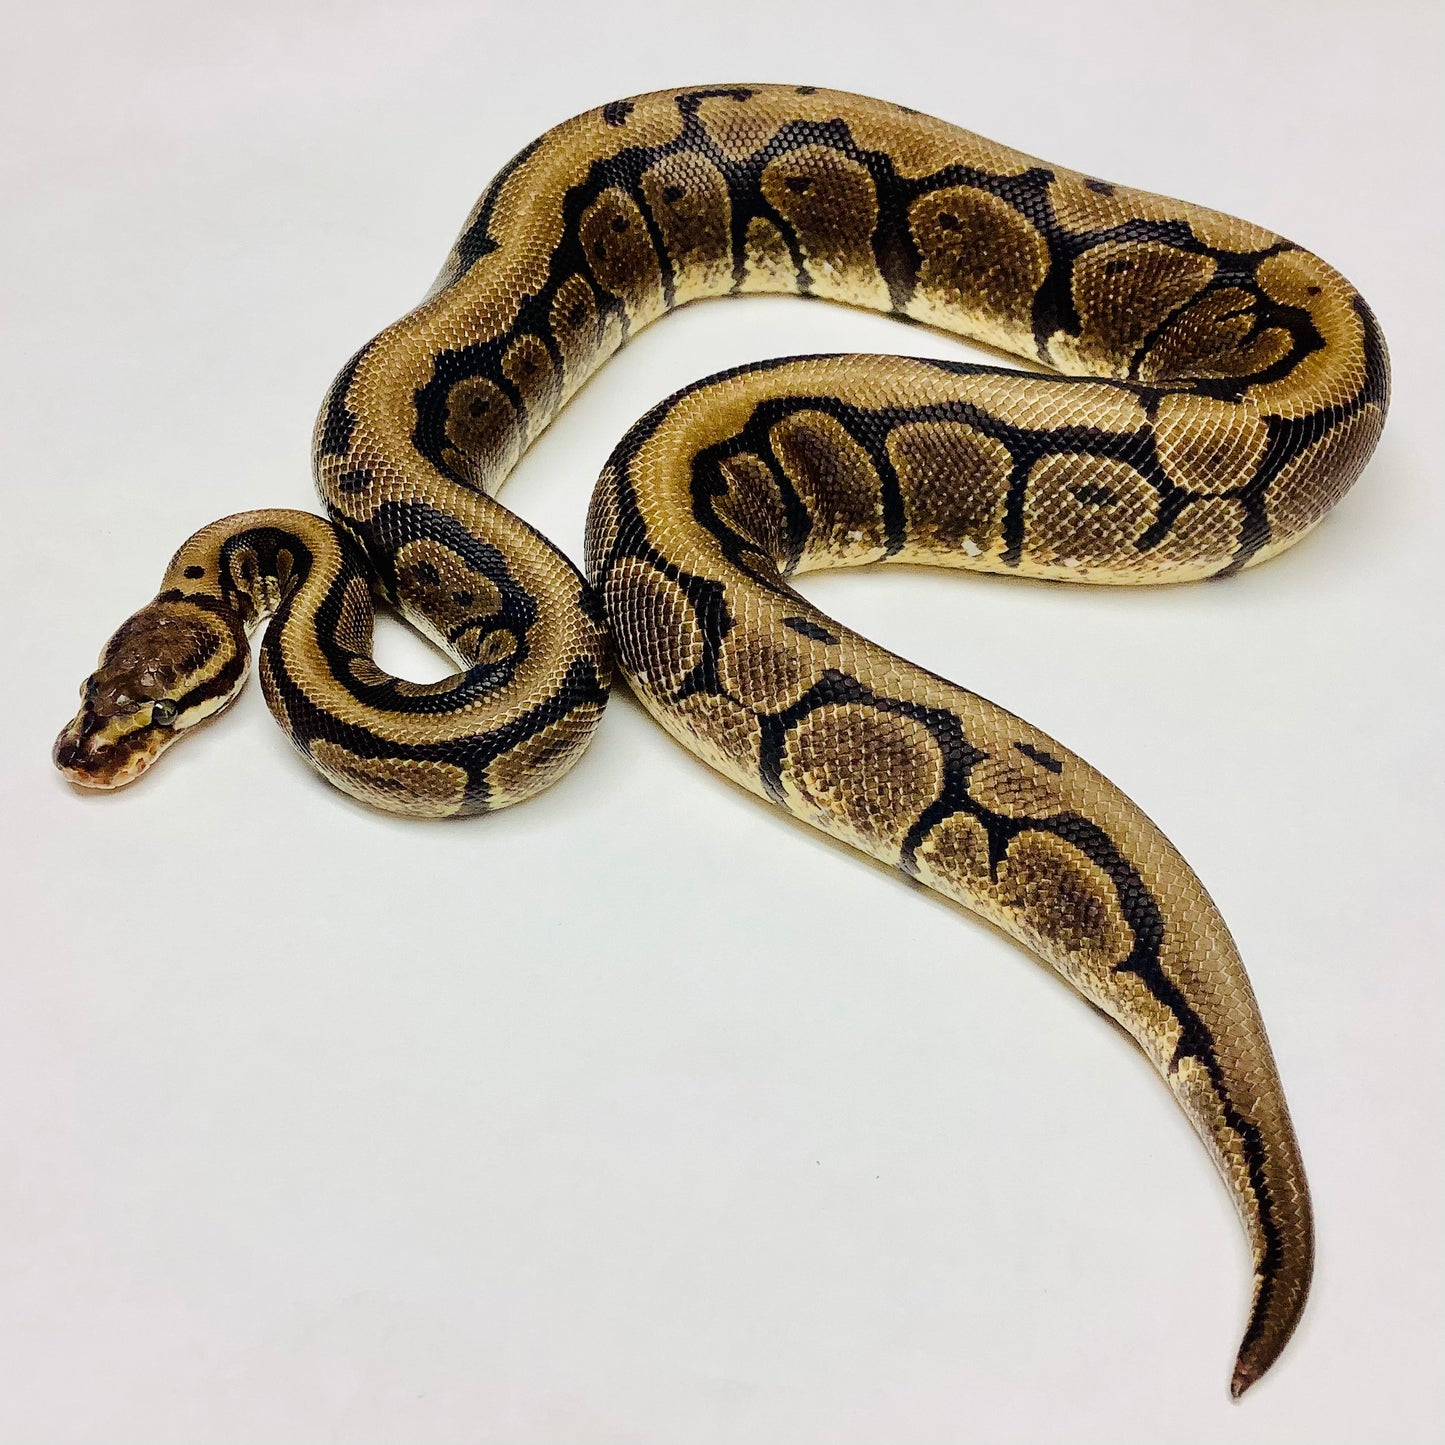 Mahogany Spider Ball Python -Male #2020M03-1